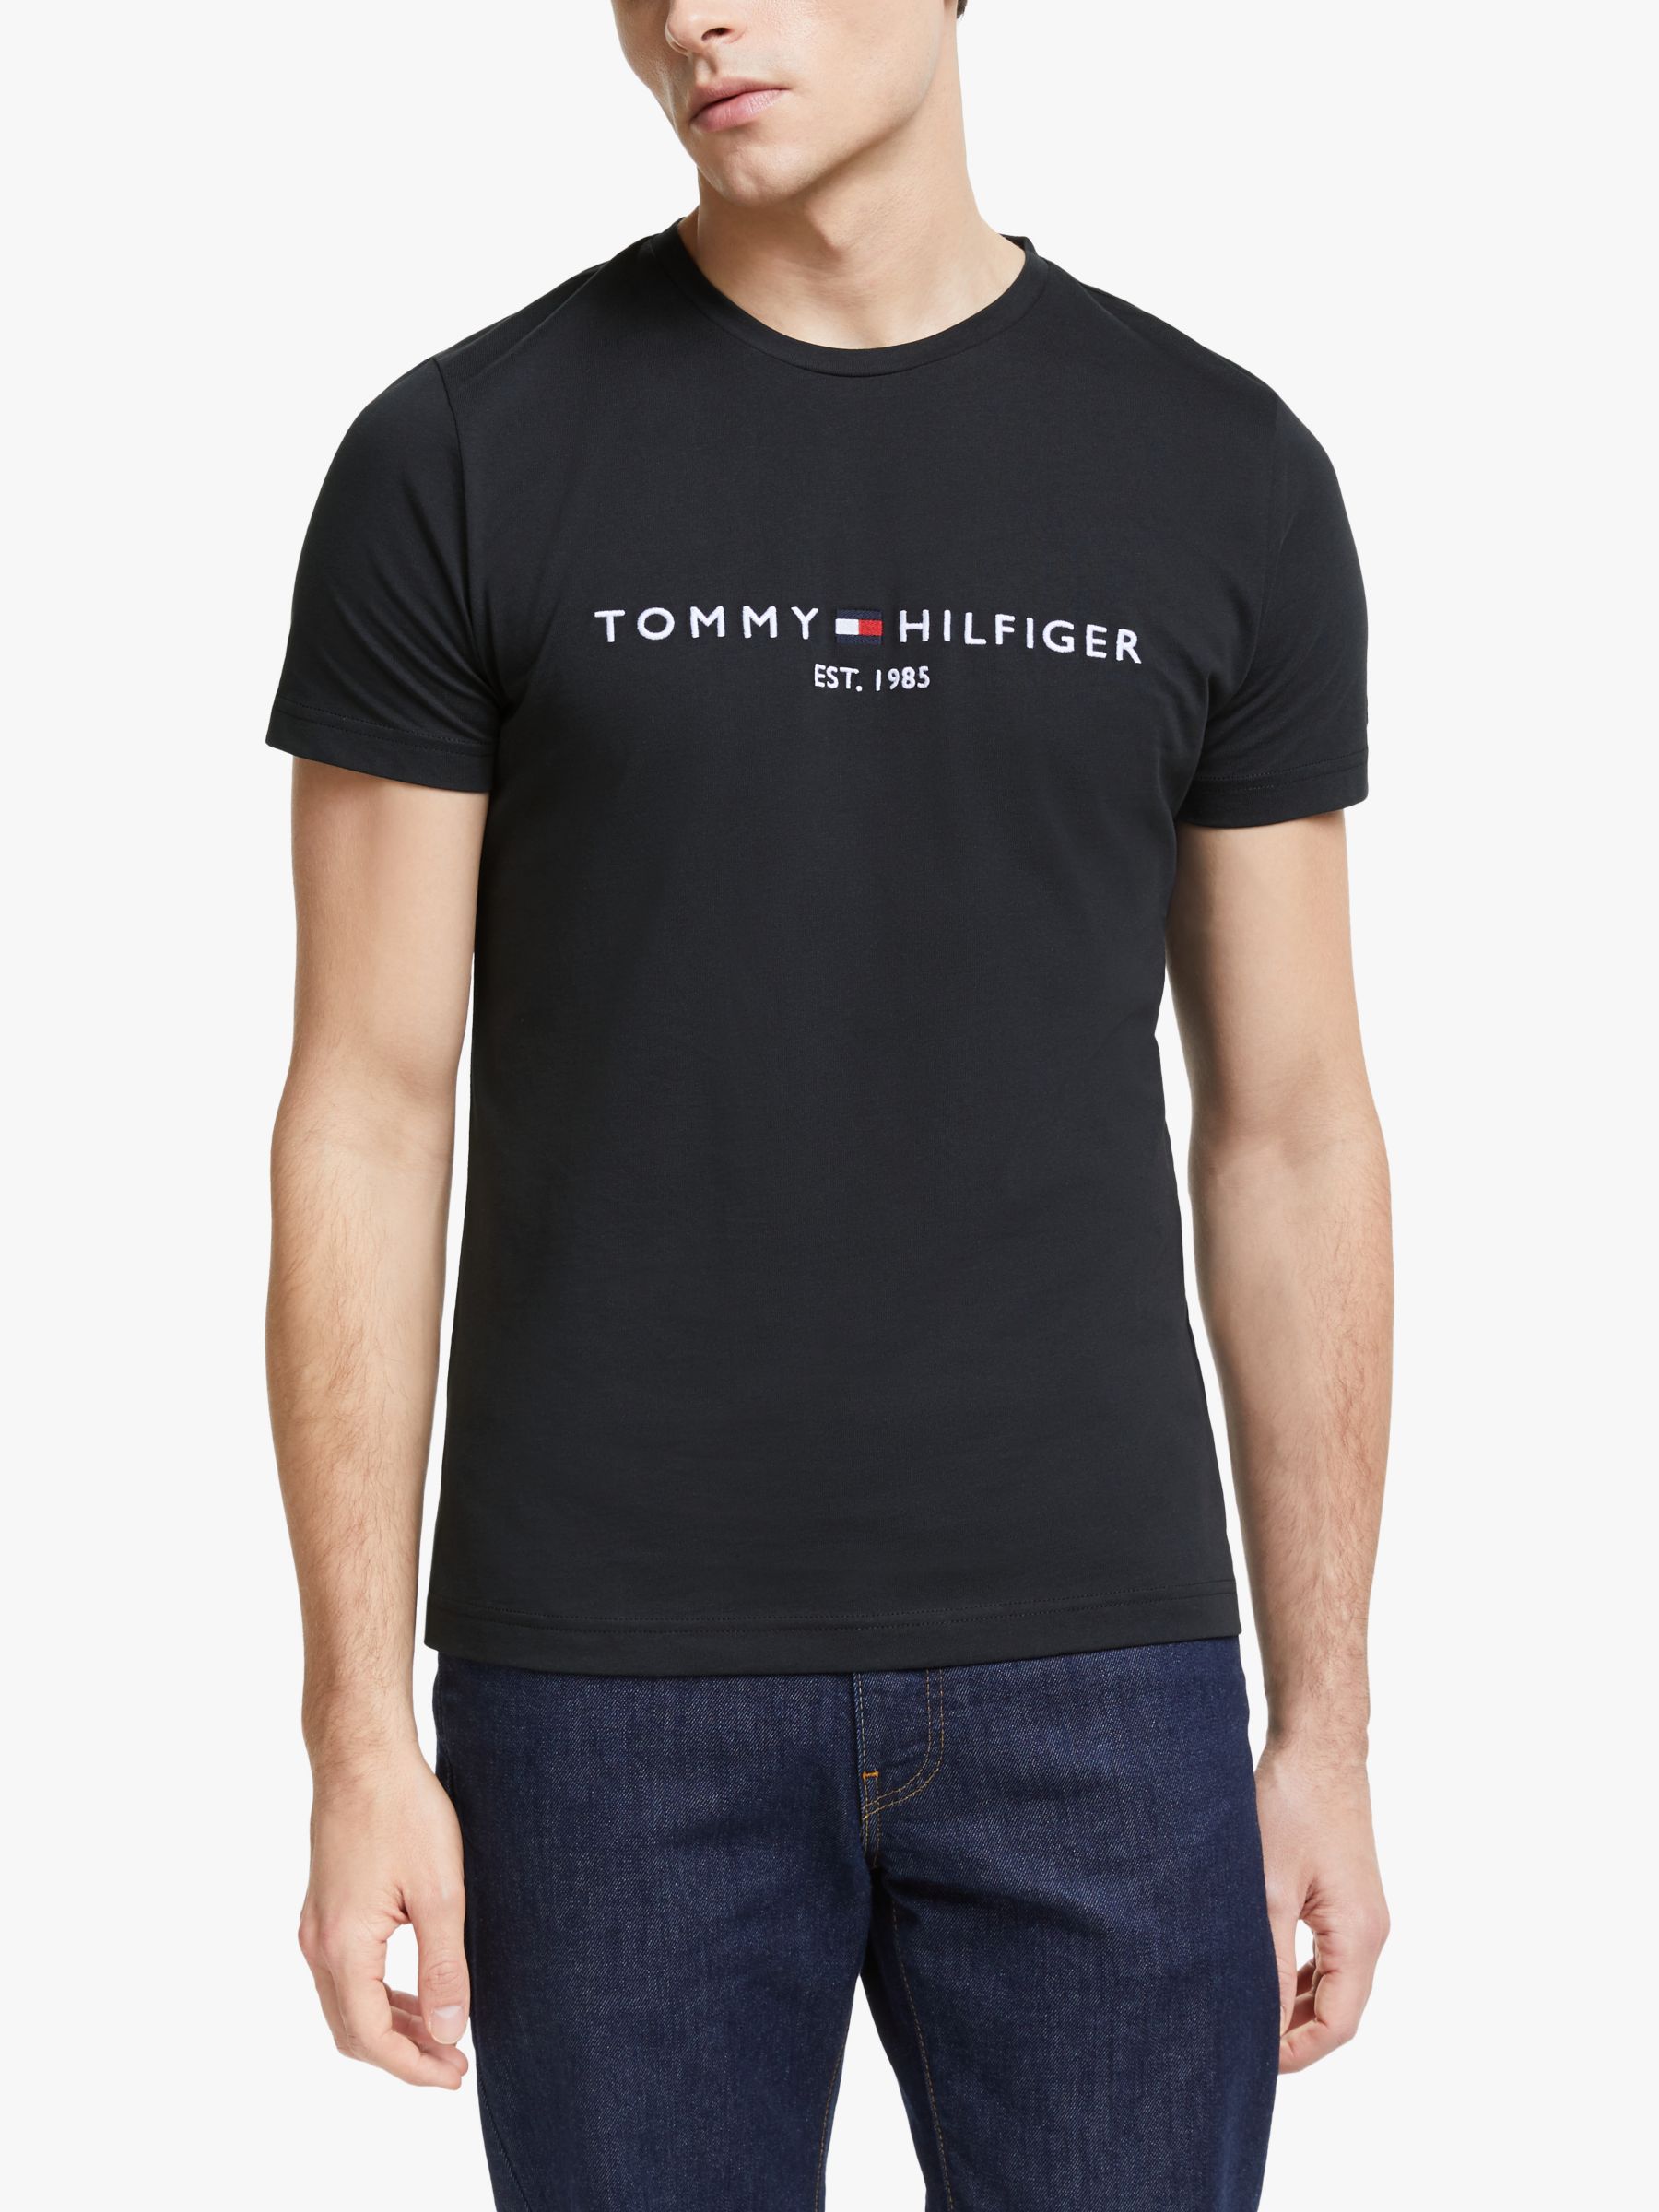 Tommy Hilfiger Black T Shirt Deals, 54% OFF | empow-her.com